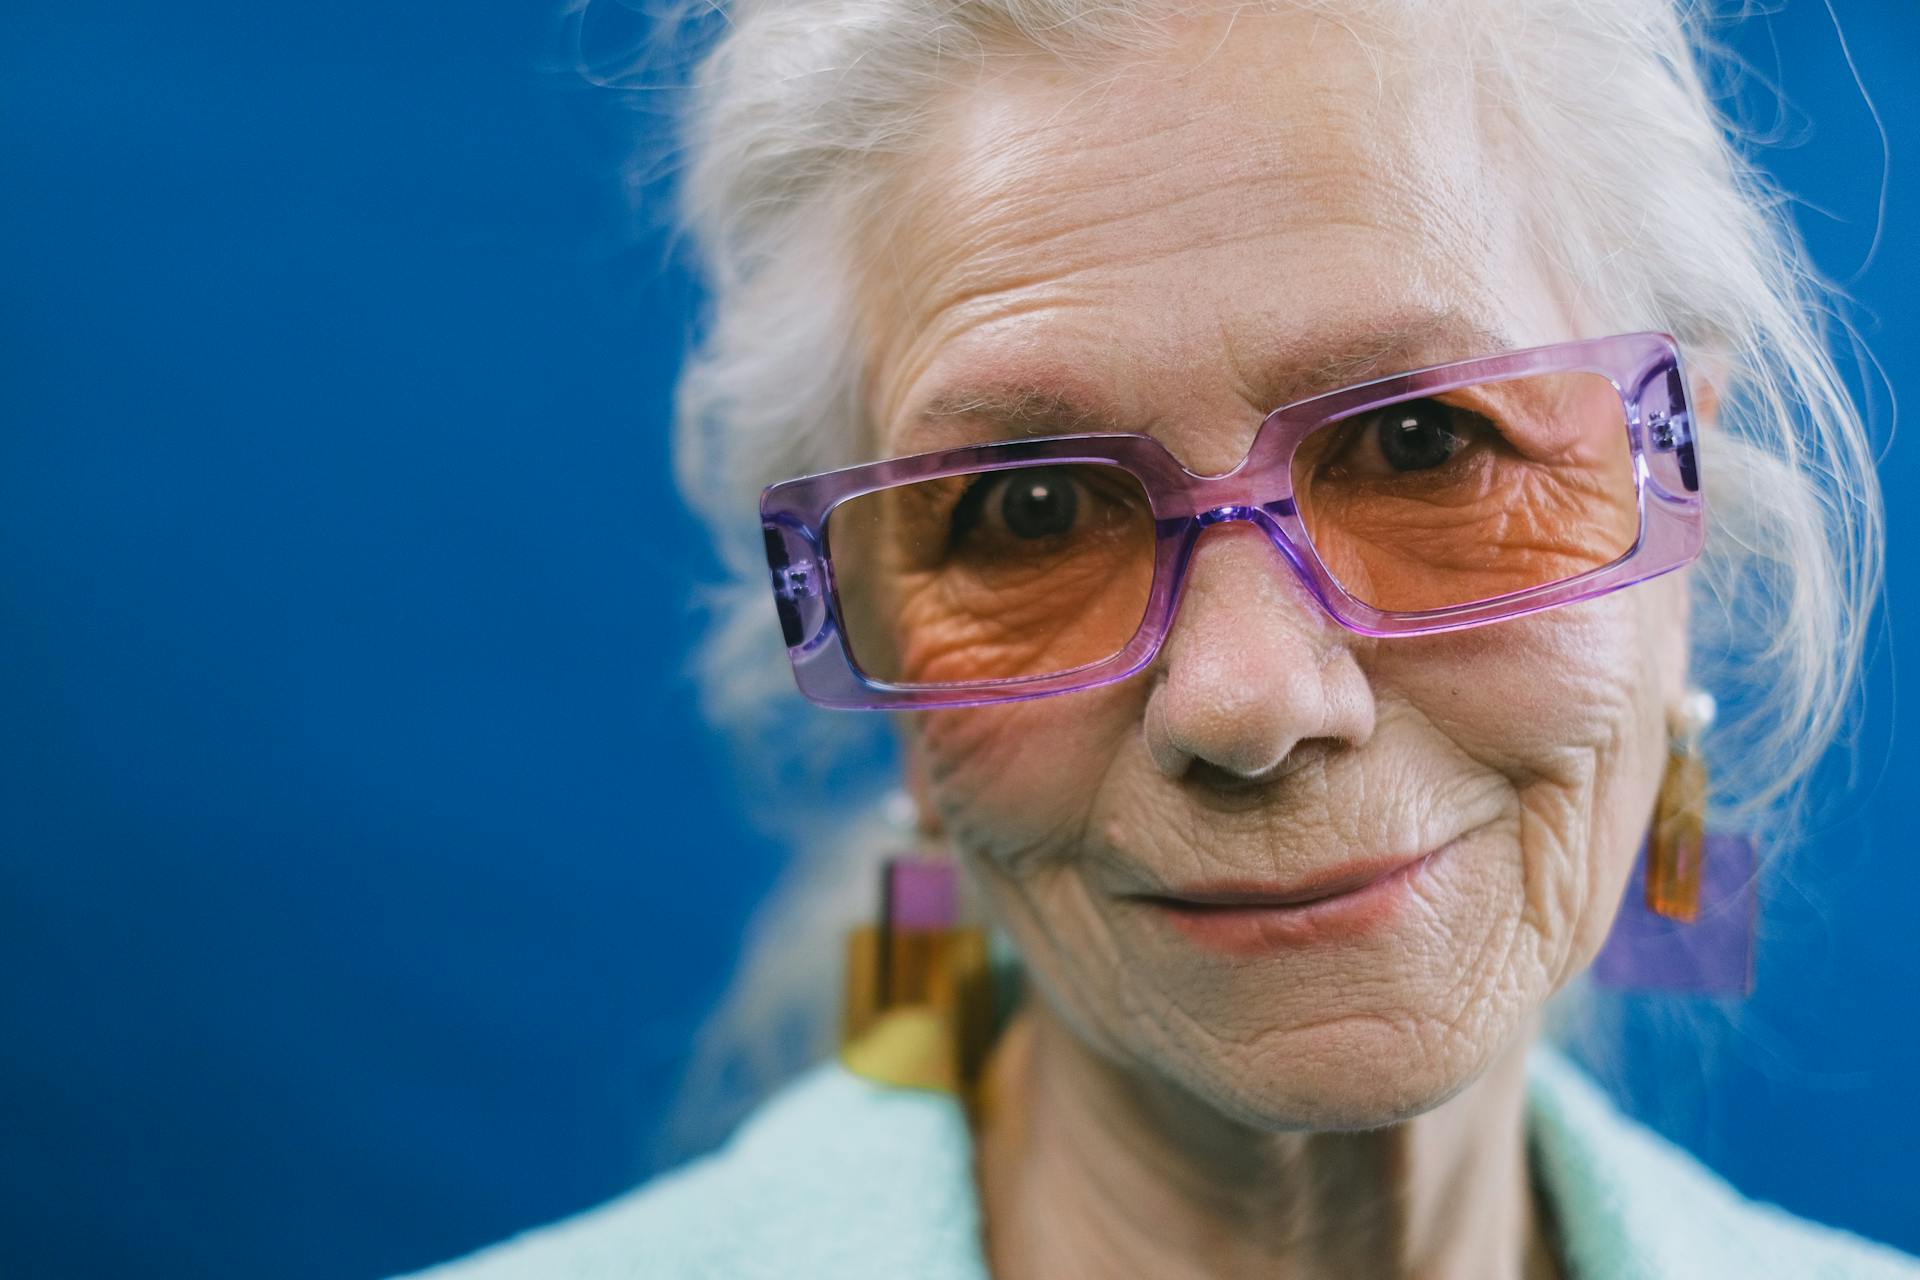 An elderly woman smiling | Source: Pexels